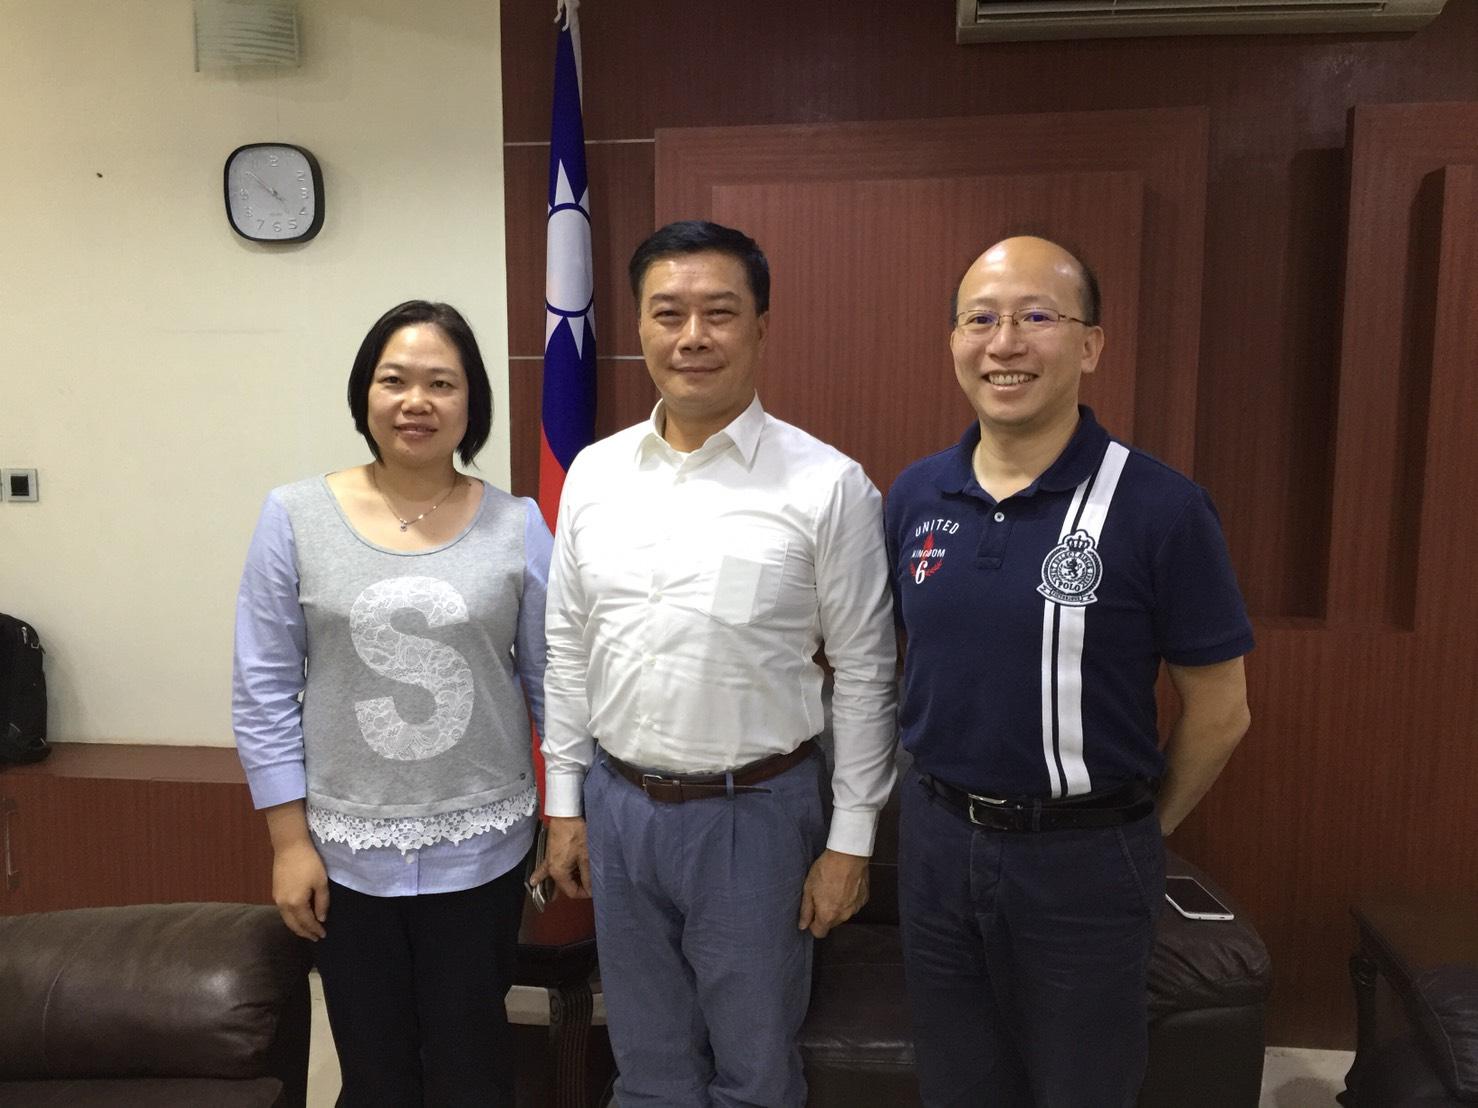 Director General Charles Li (C)

Ms. Jane Wang (L)

Mr. Dysan Lin (R)
